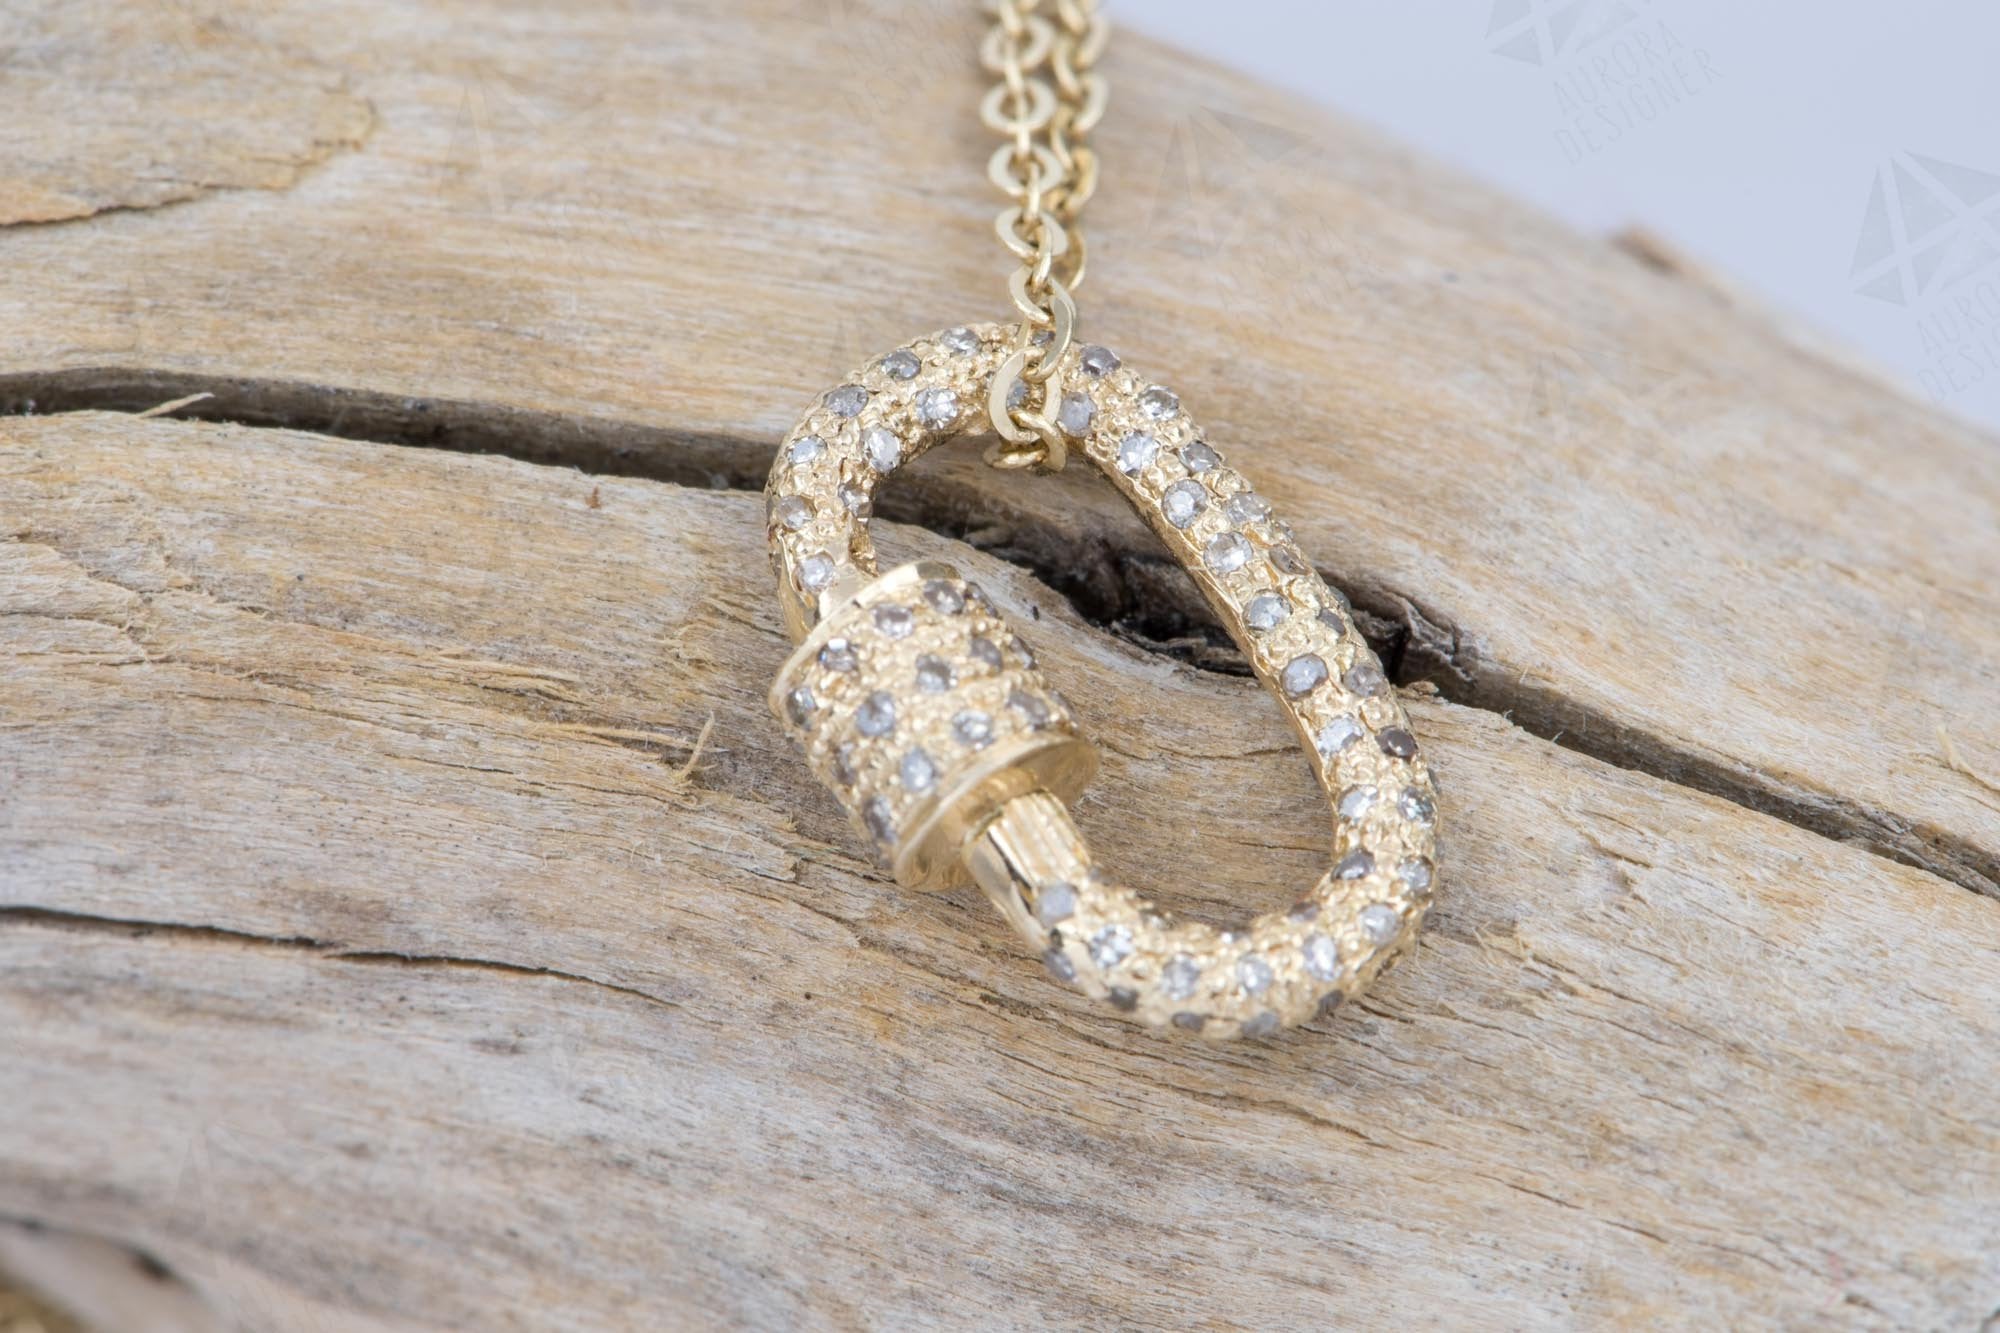 Aurora Designer - 14K Gold Necklace Chain Adjustable Length with